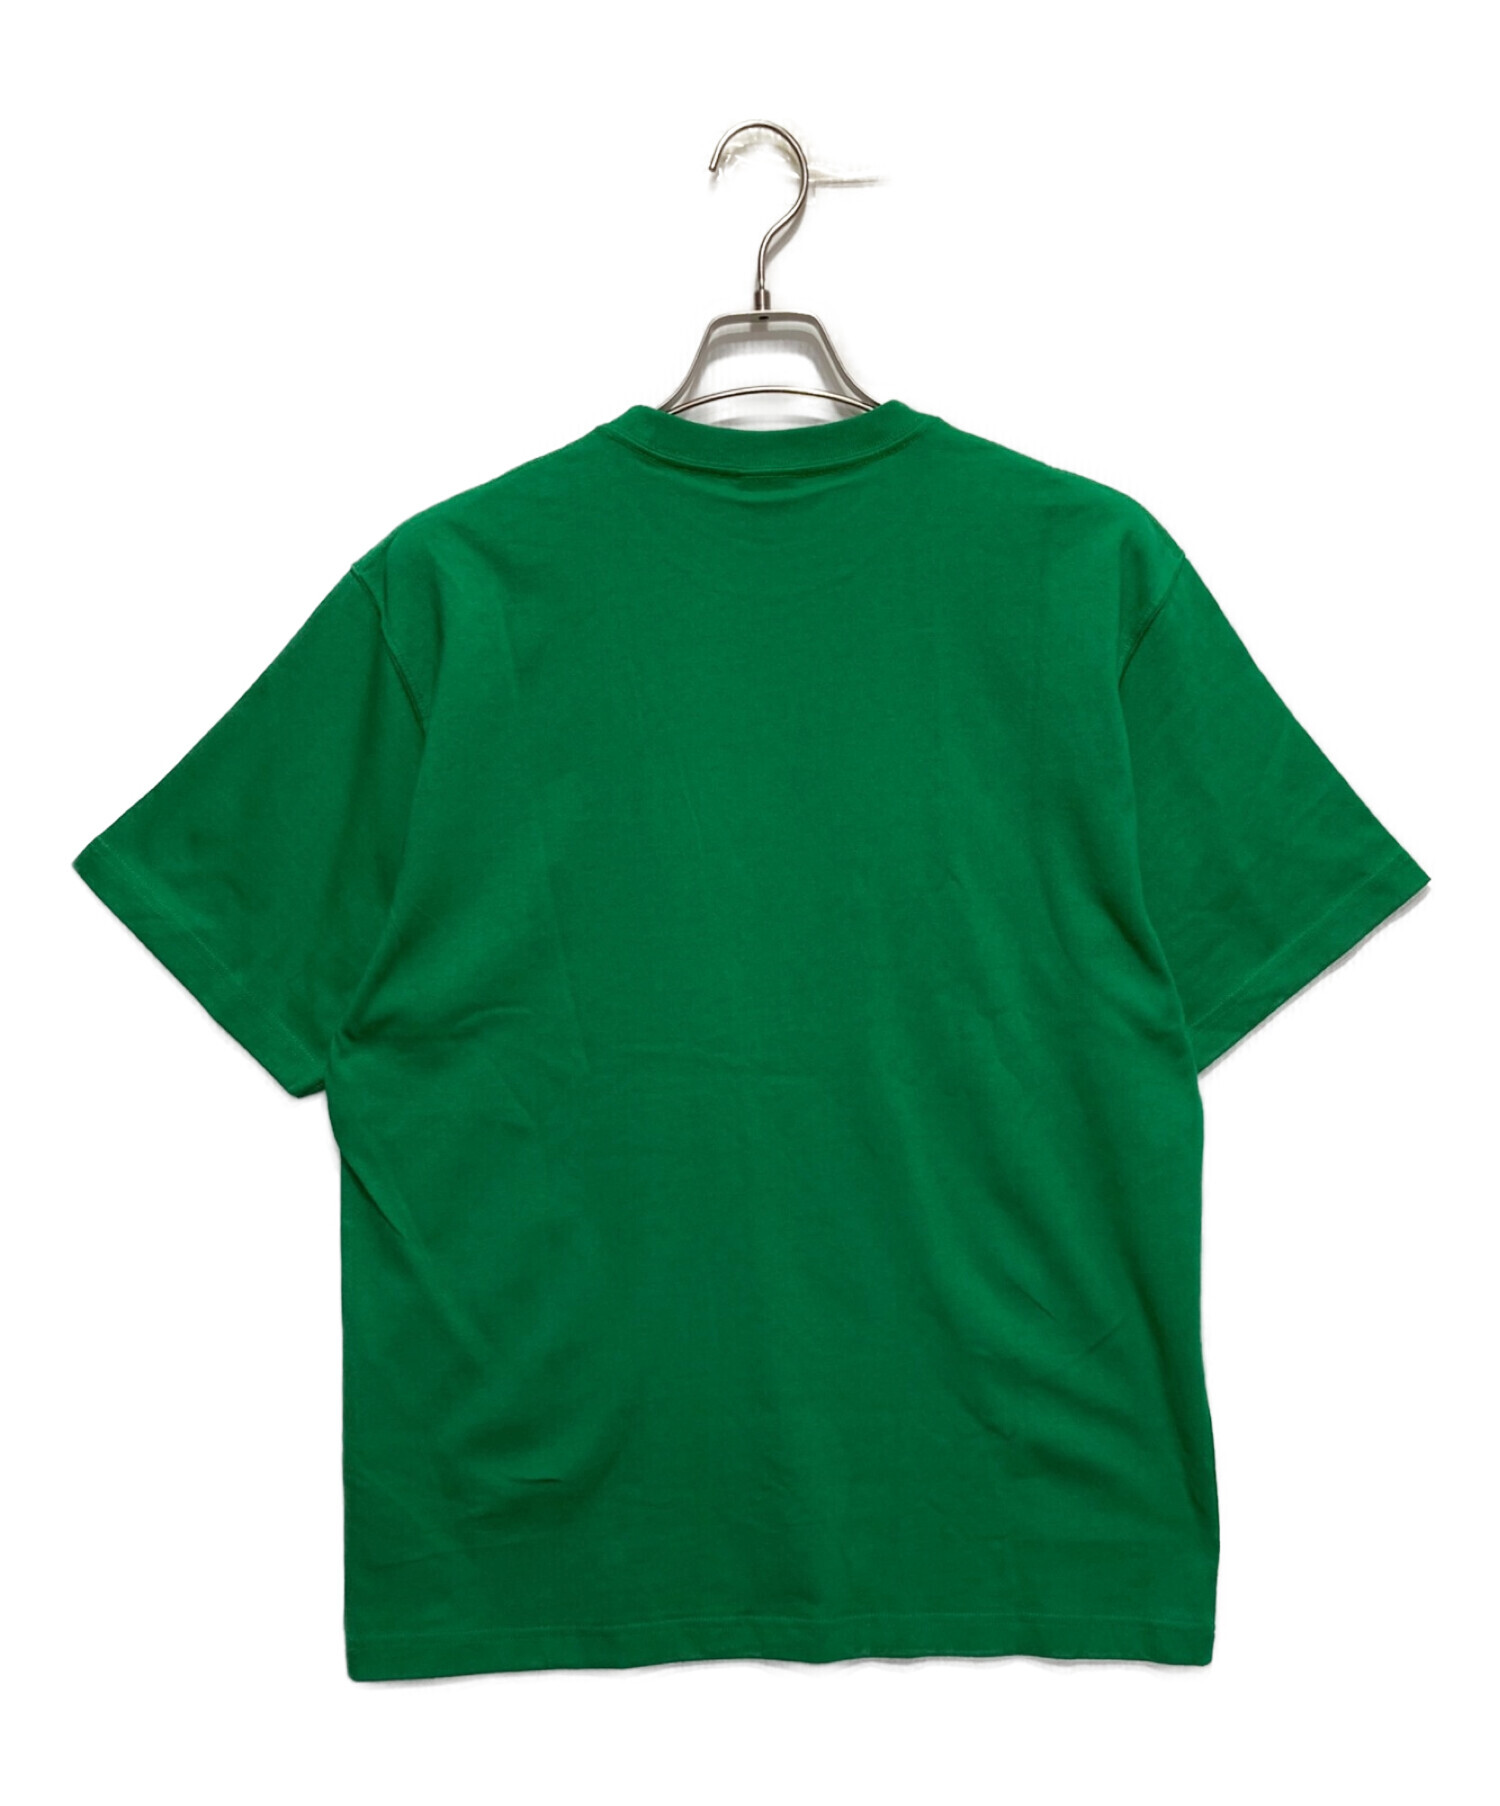 BlackEyePatch (ブラックアイパッチ) プリントTシャツ グリーン サイズ:M 未使用品